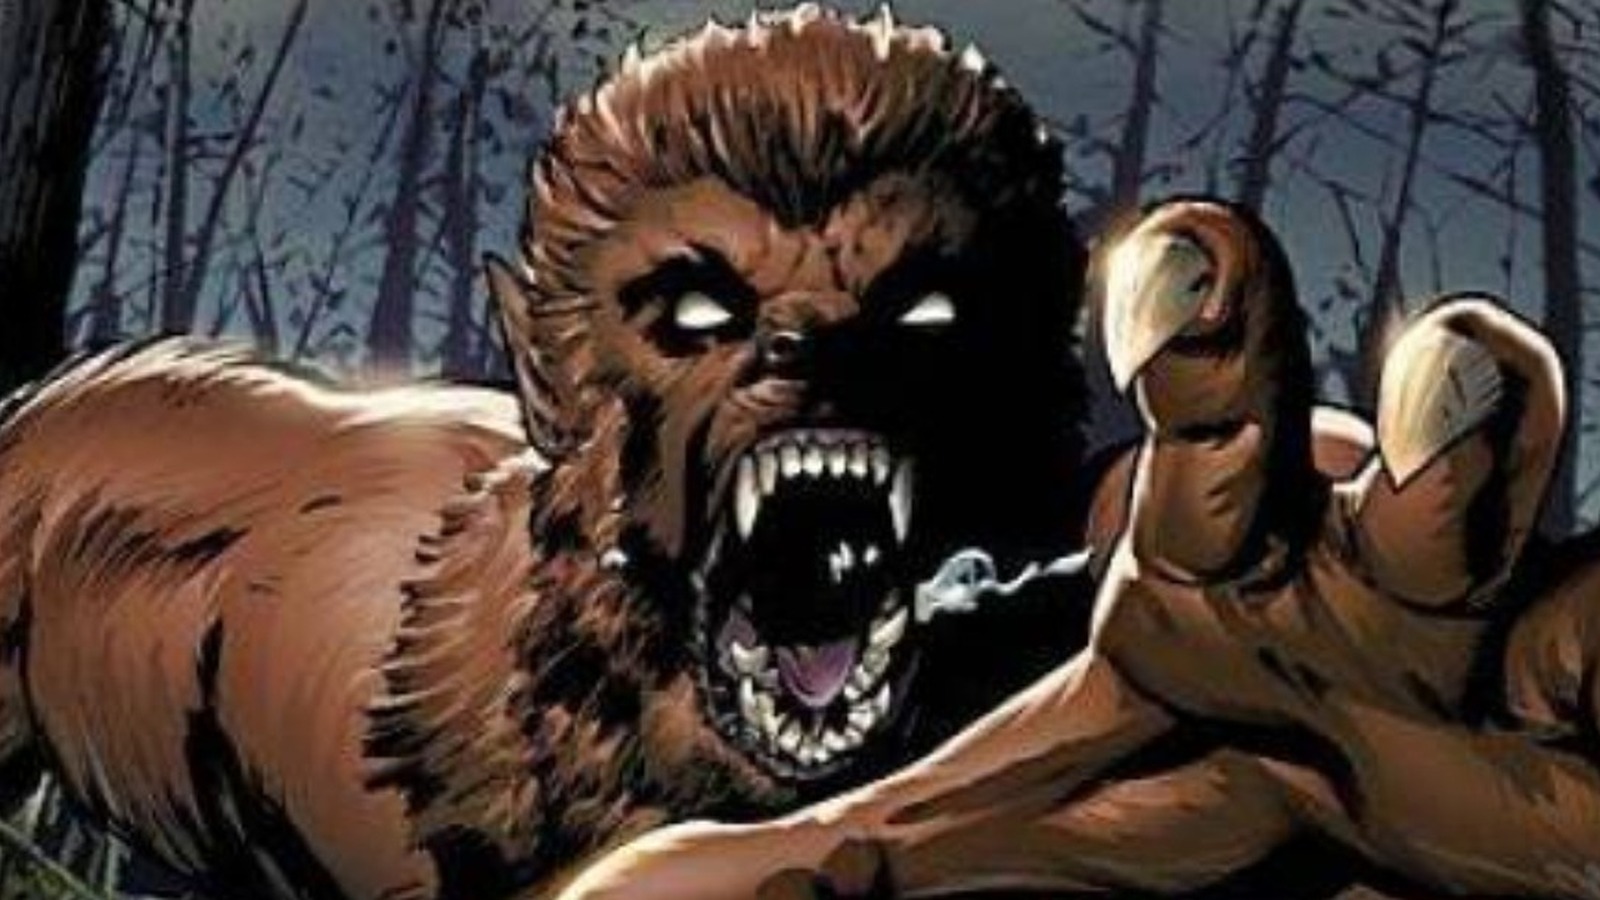 Night of the Werewolf, The Hardy Boys Wiki